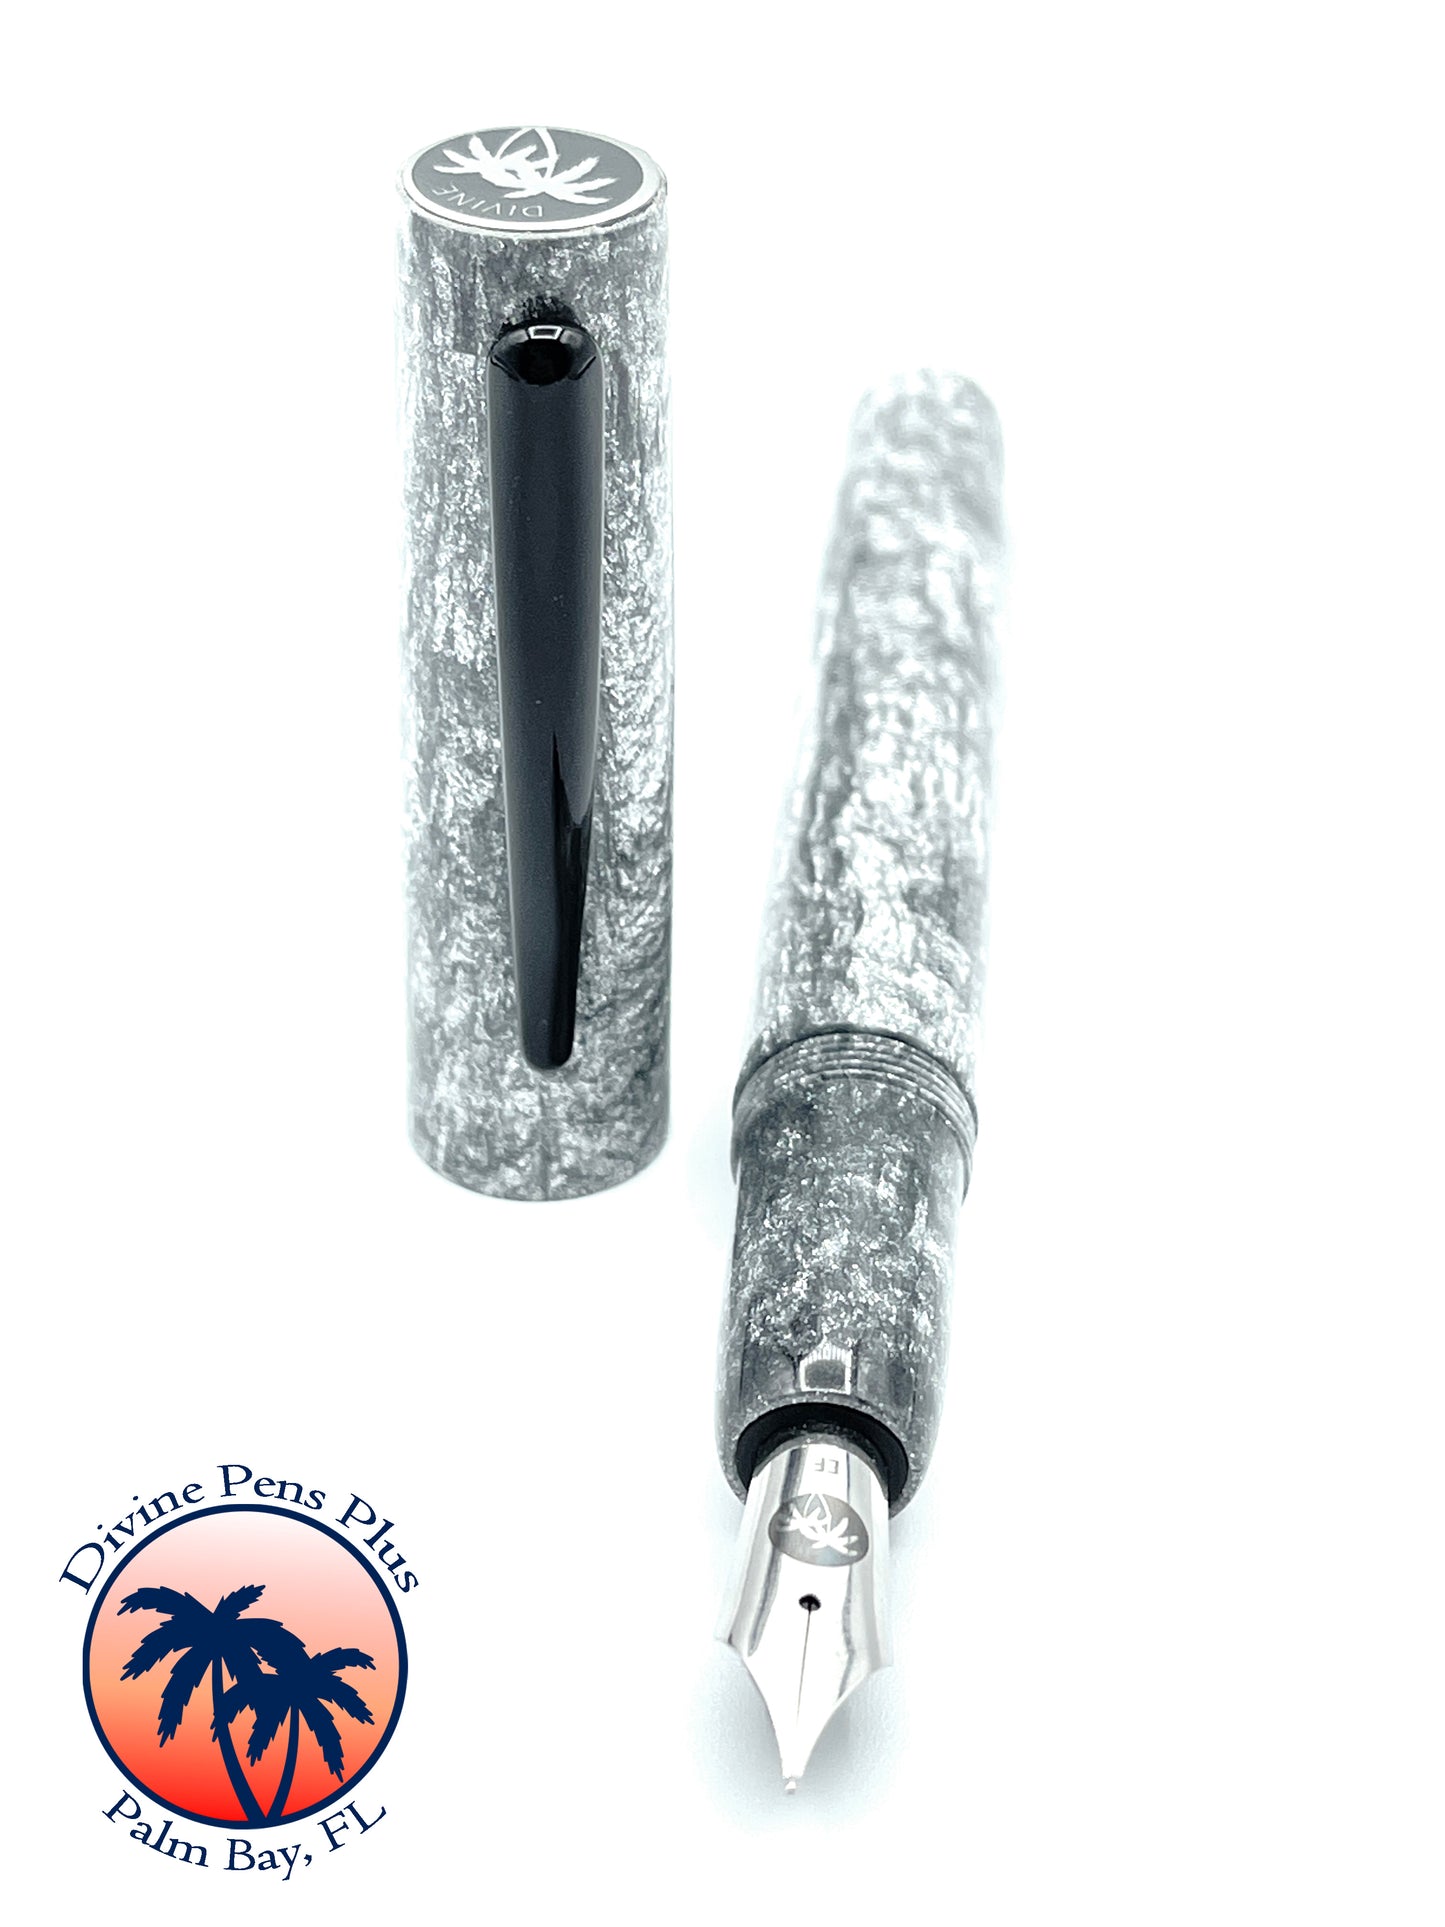 Agape Fountain Pen - "Liquid Metal"